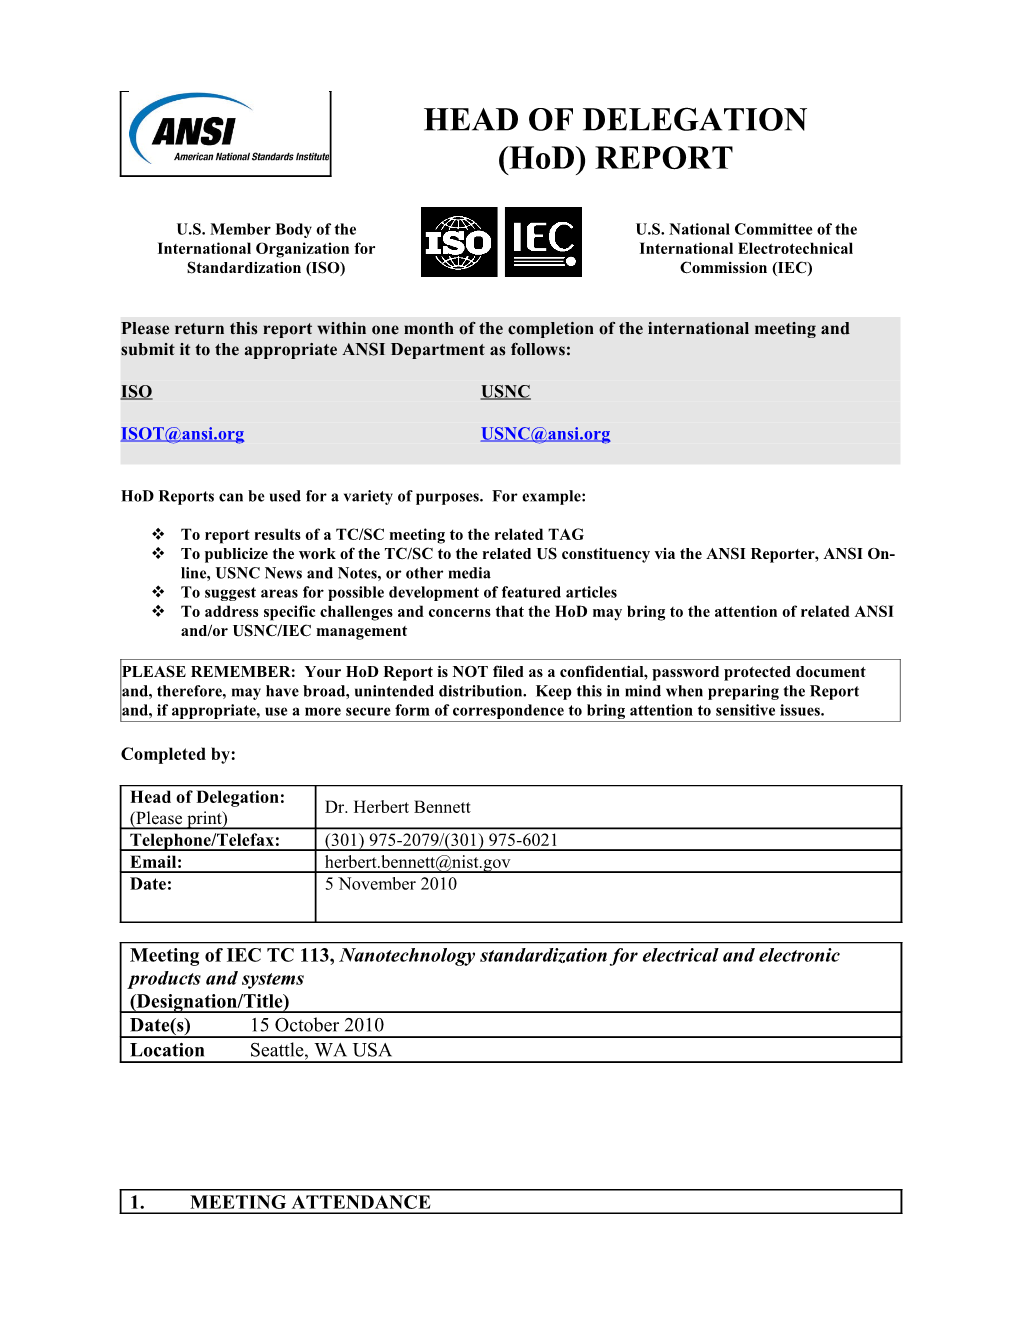 Hod Report Tc 113 Meeting Held in Seattle October 2010